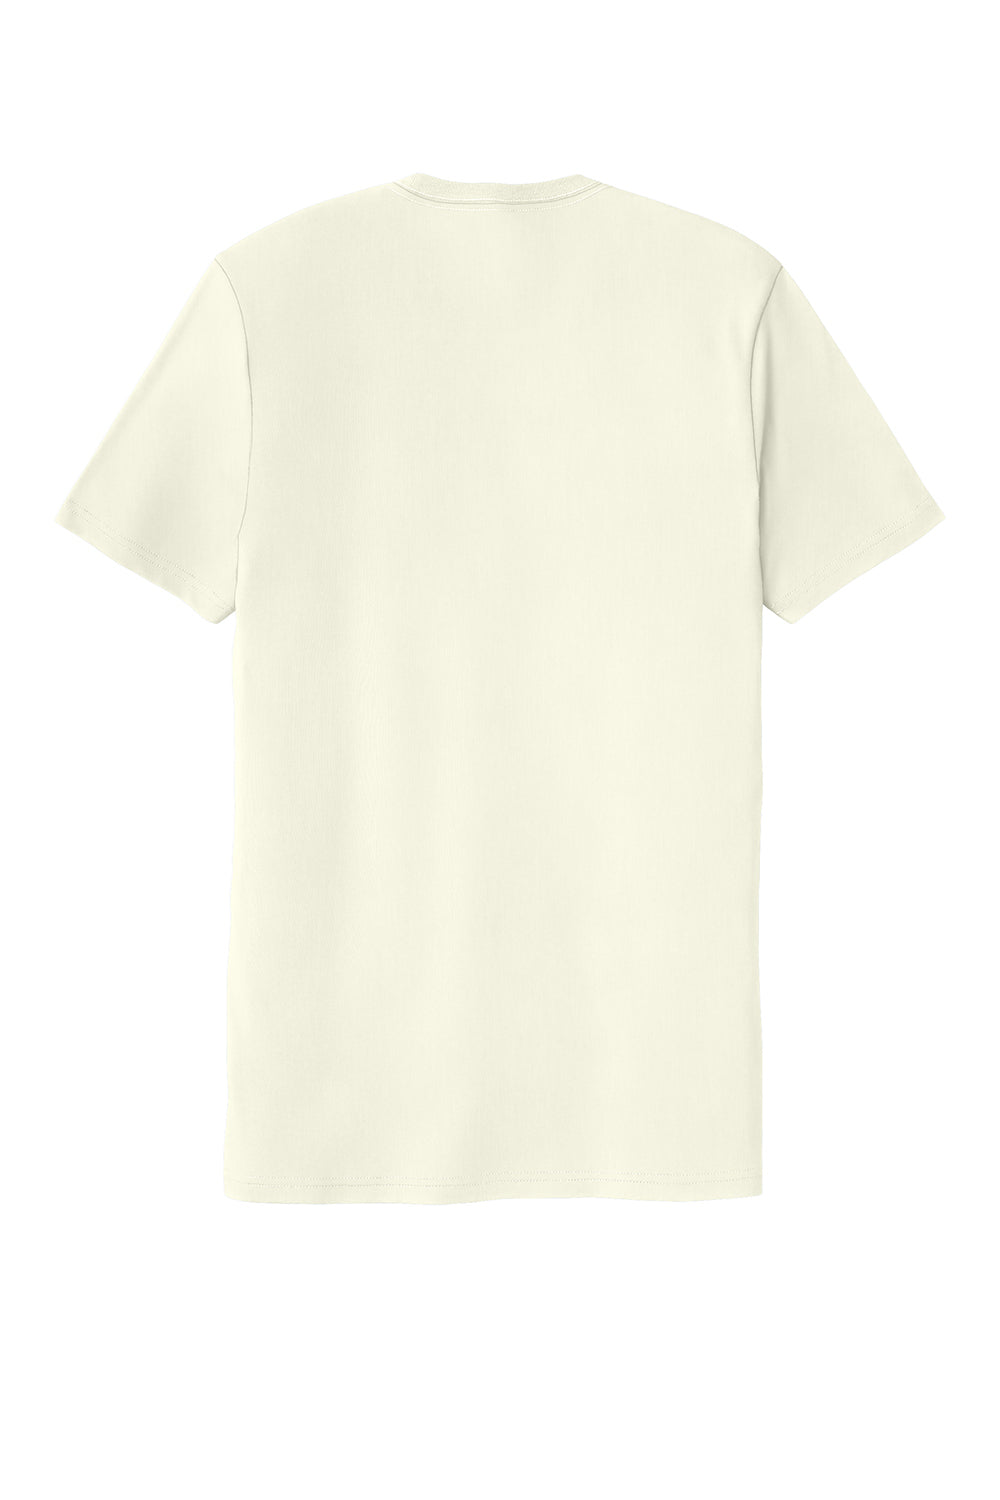 Allmade AL2100 Mens Organic Short Sleeve Crewneck T-Shirt White Sand Flat Back